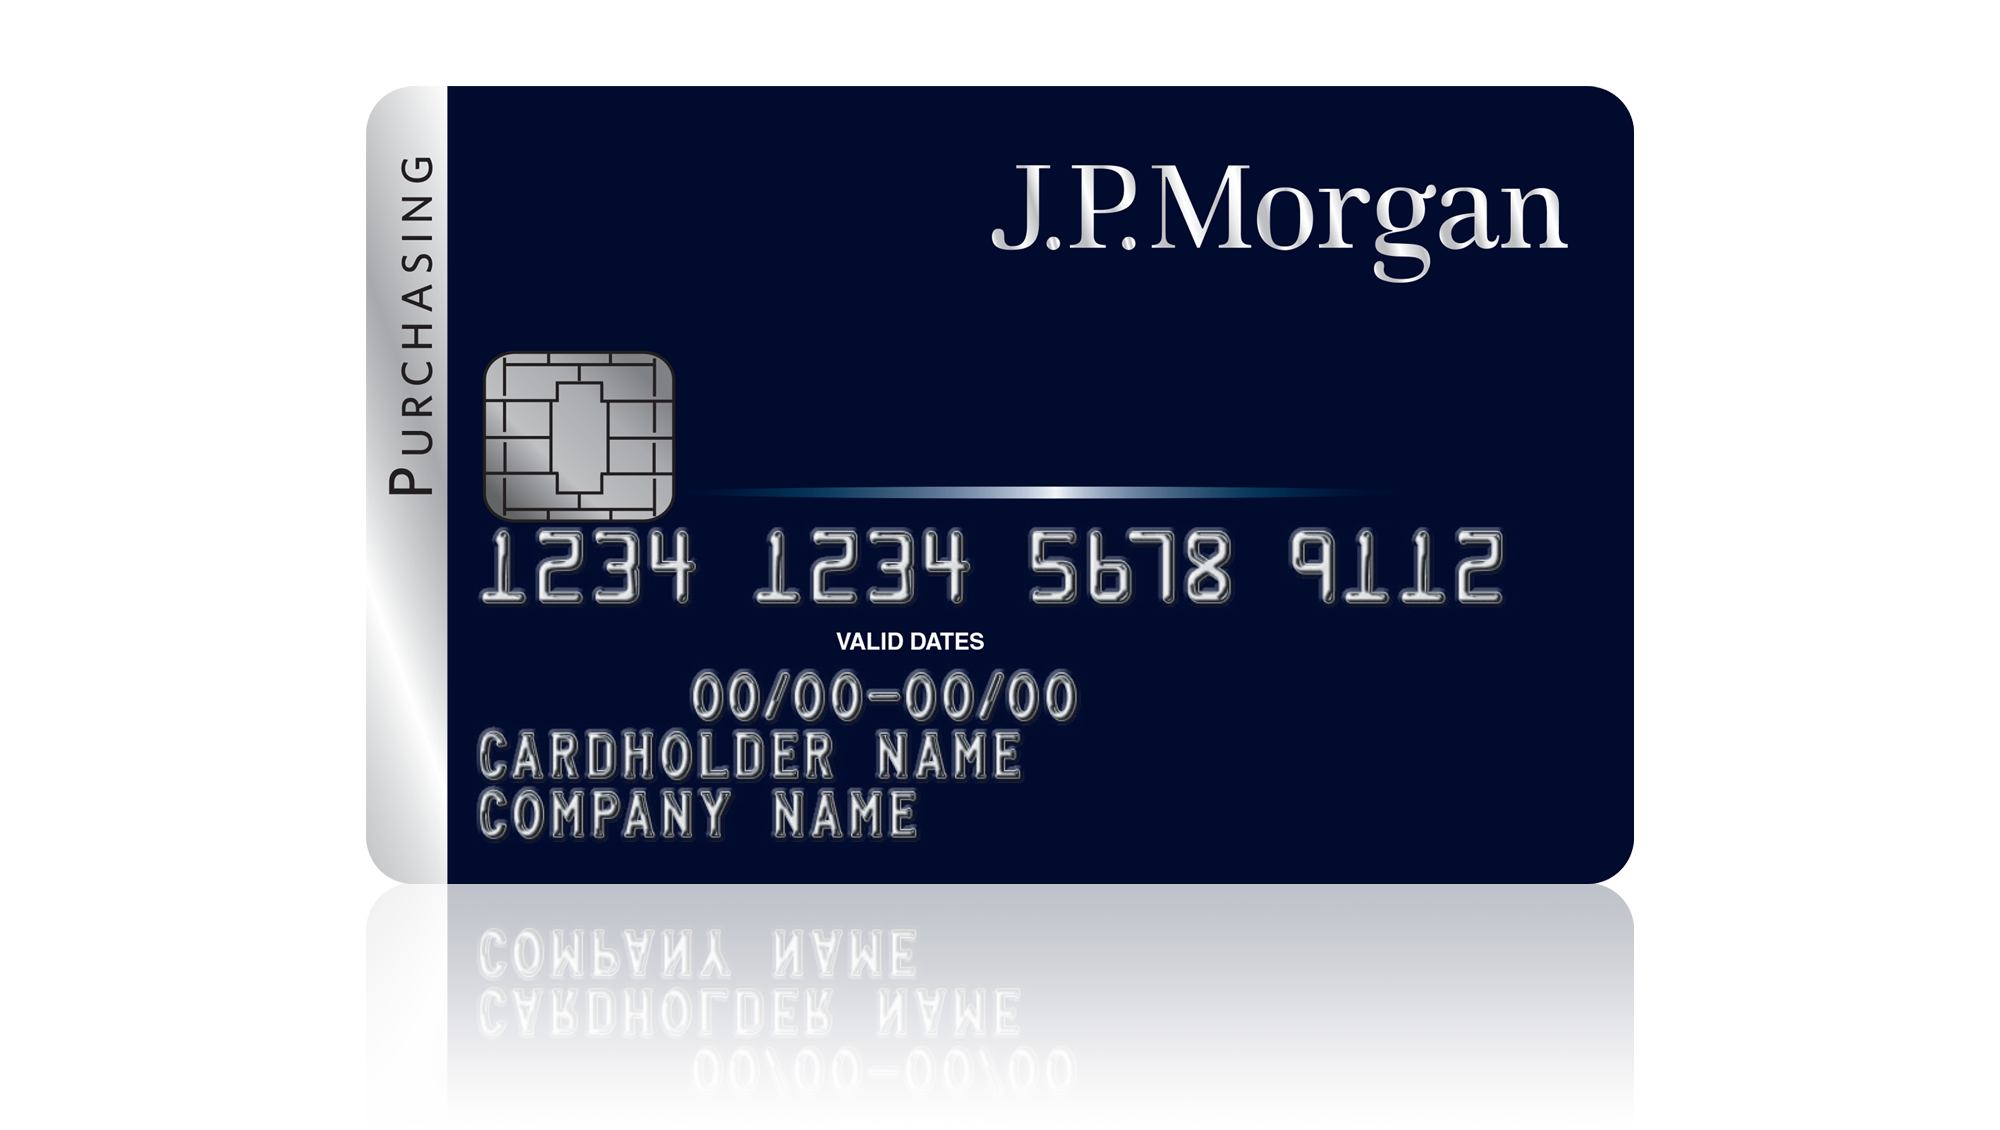 jpmorgan chase corporate credit card login